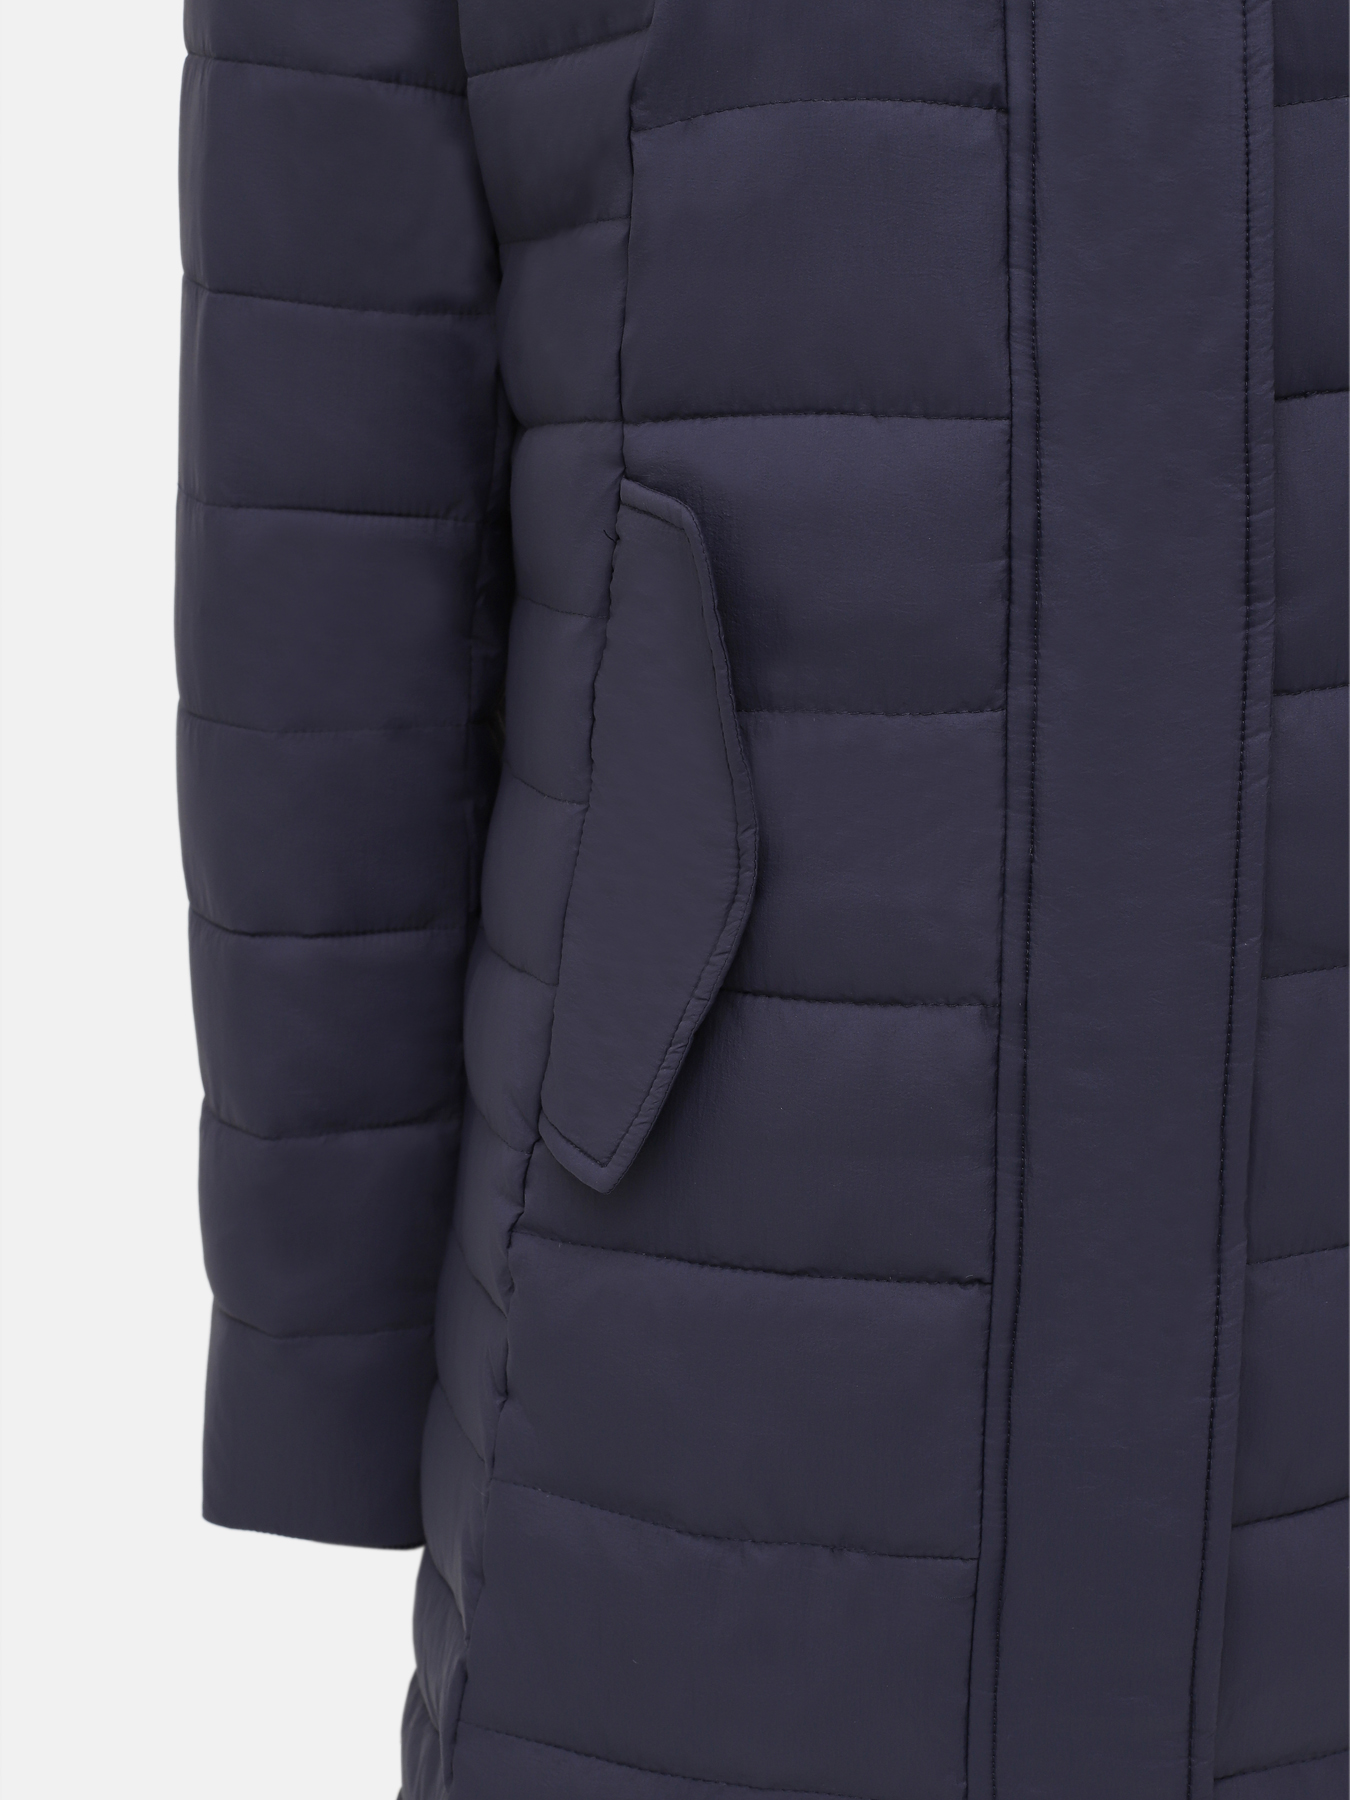 Пальто зимнее Alessandro Manzoni Purpur 384503-058, цвет темно-синий, размер 54-56 - фото 4